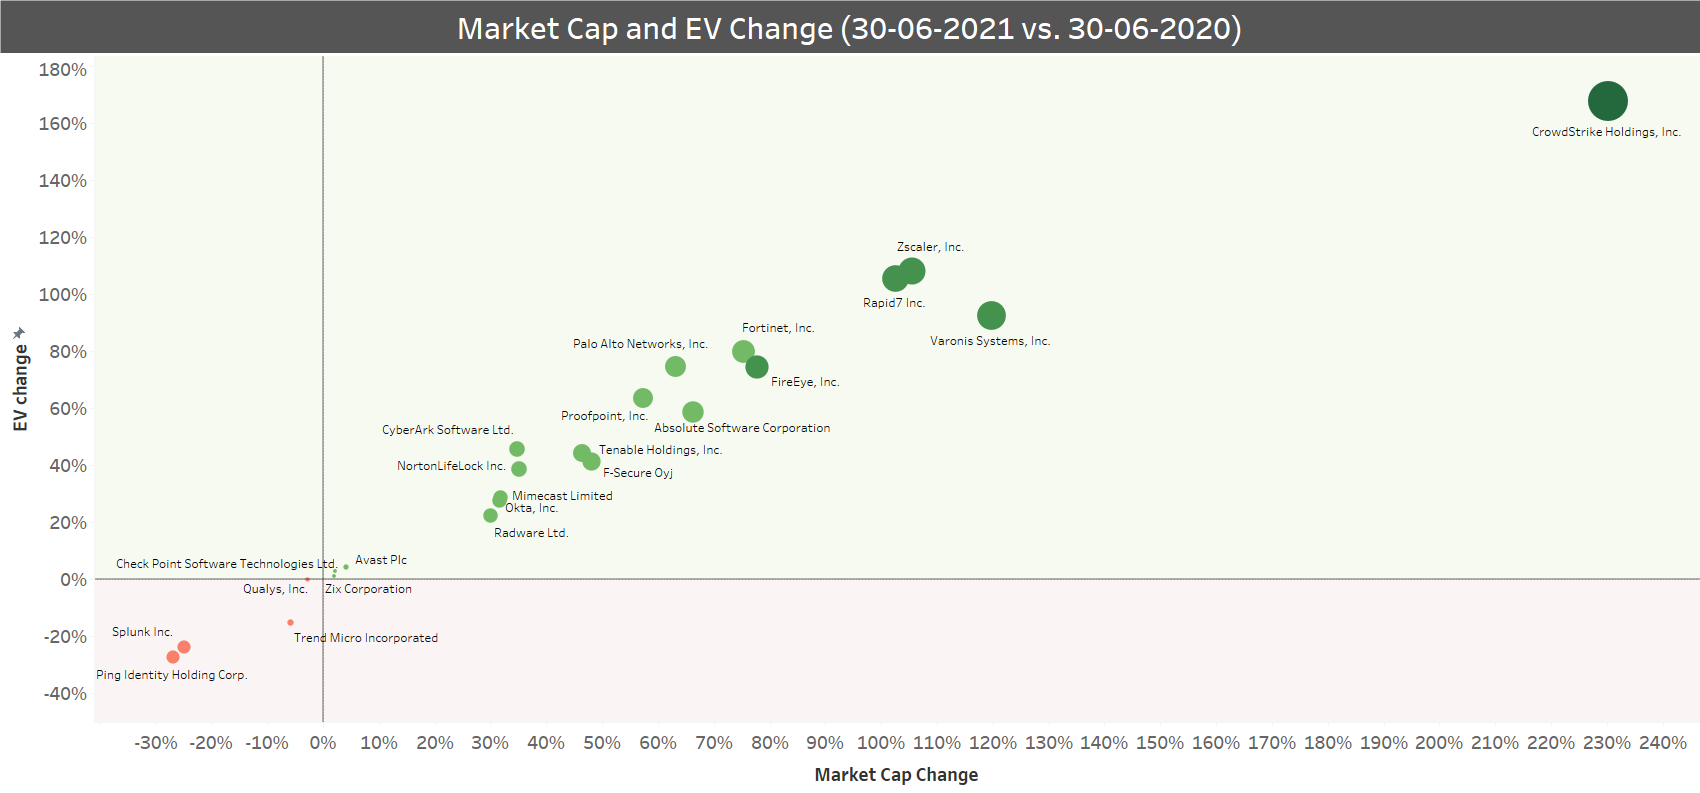 Market cap and EV change (30-06-2021 vs 30-06-2020)